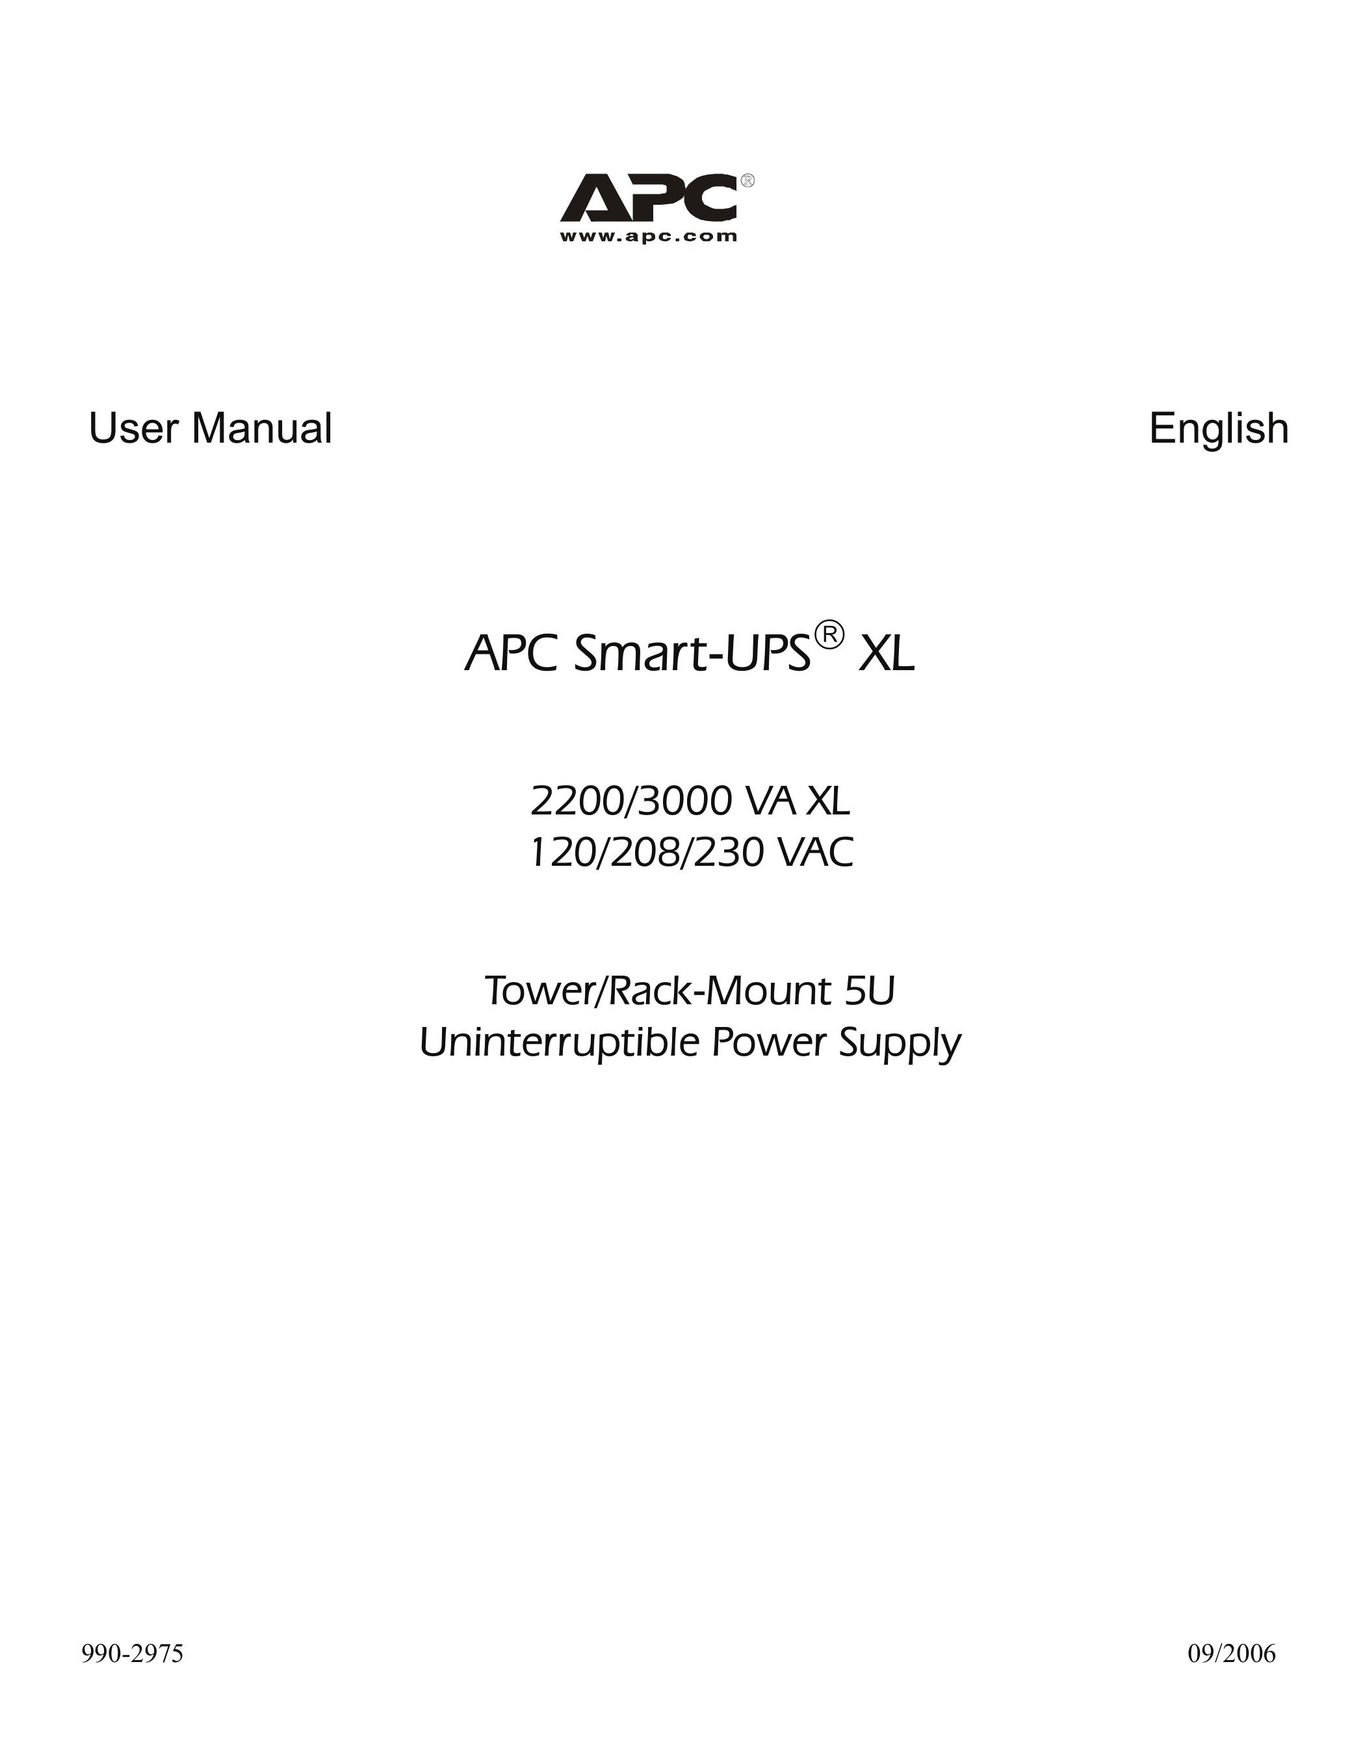 American Power Conversion 208 VAC Power Supply User Manual